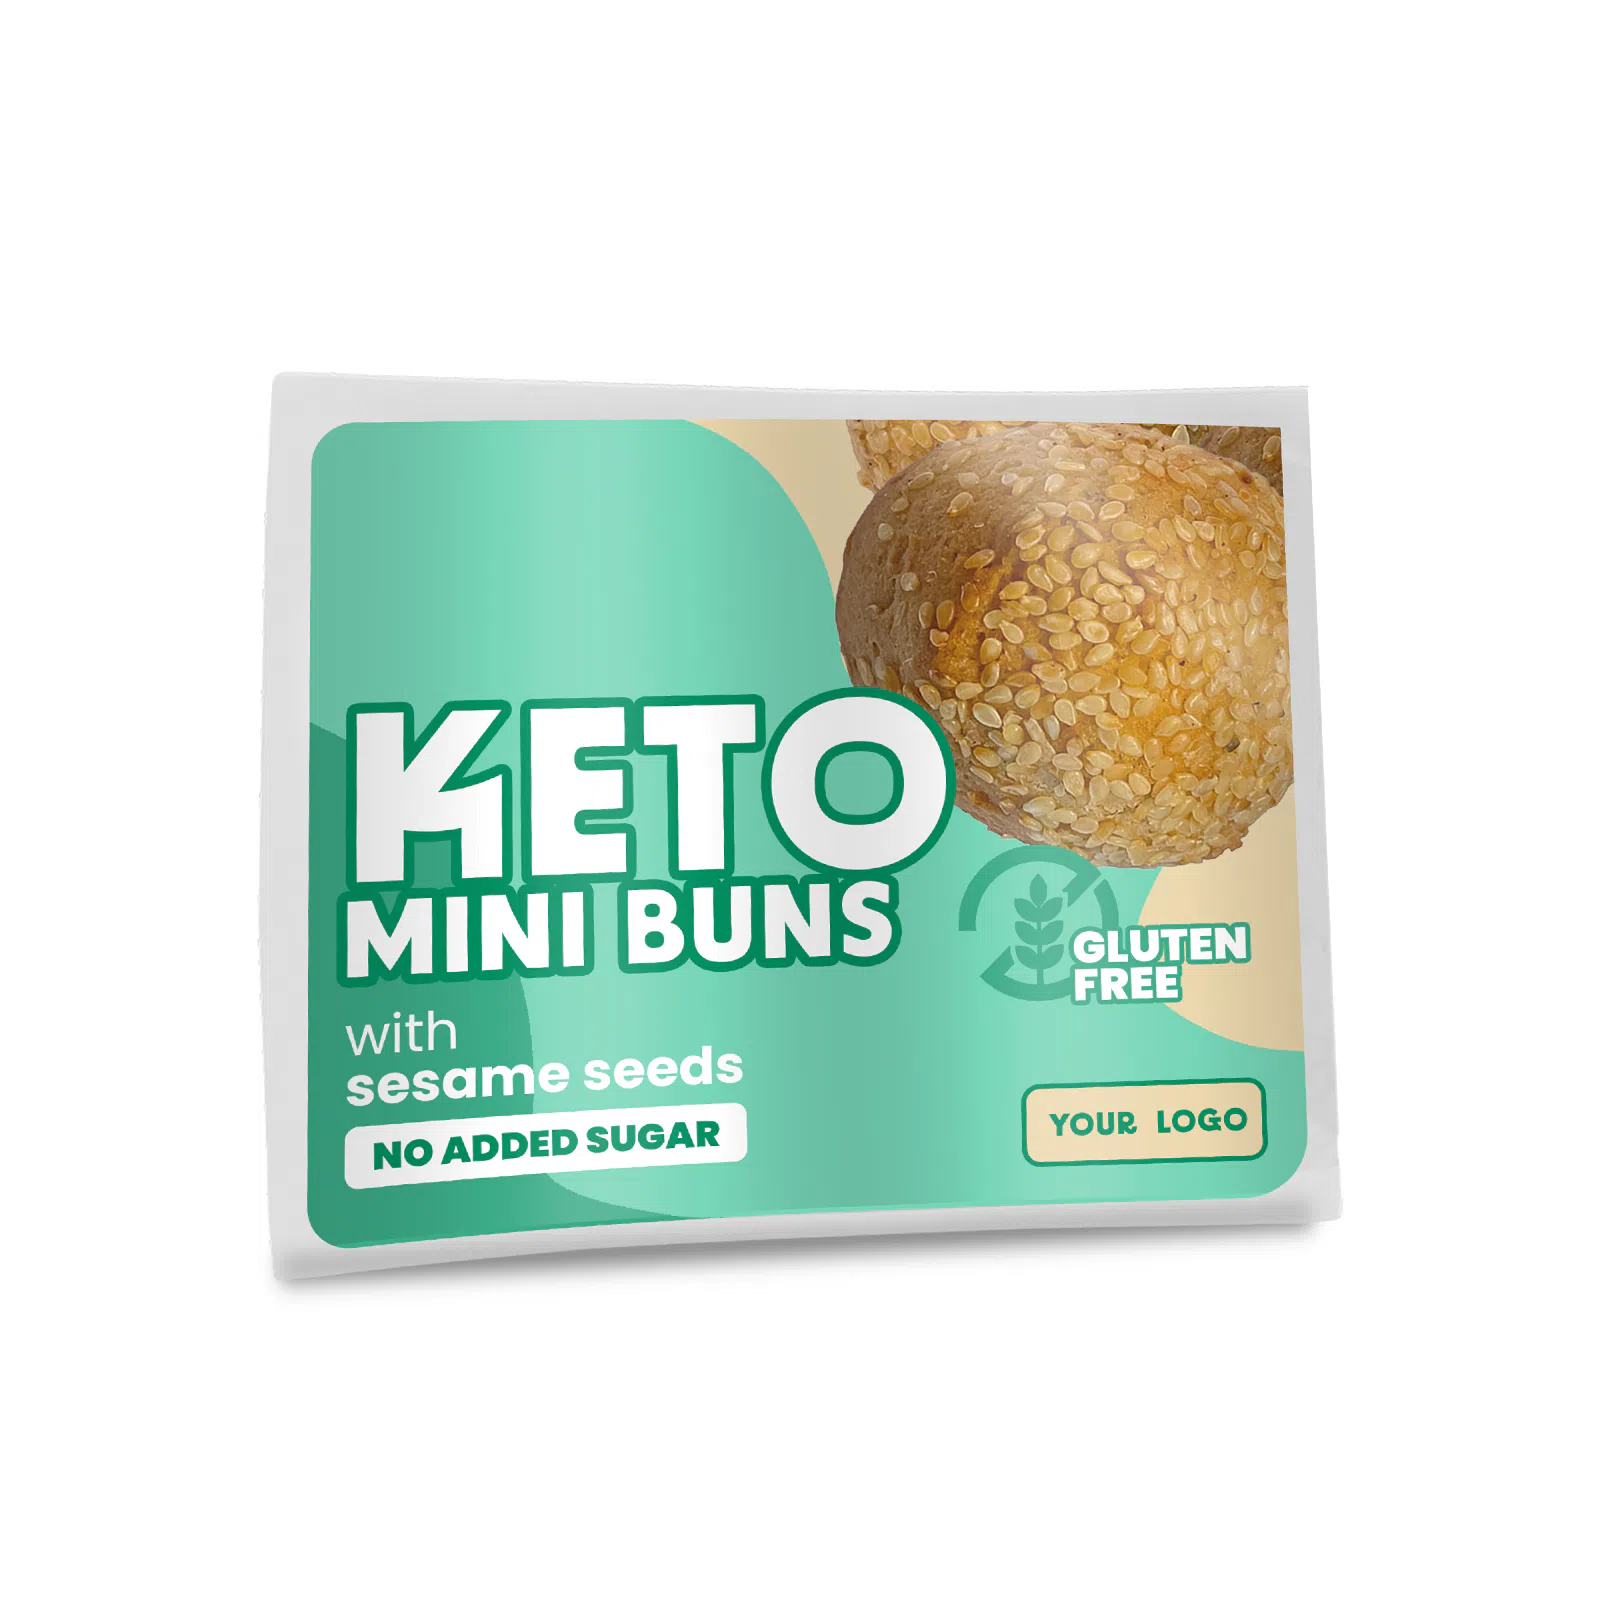 Private label amerpharma keto mini buns with sesame seeds gluten free no added sugar